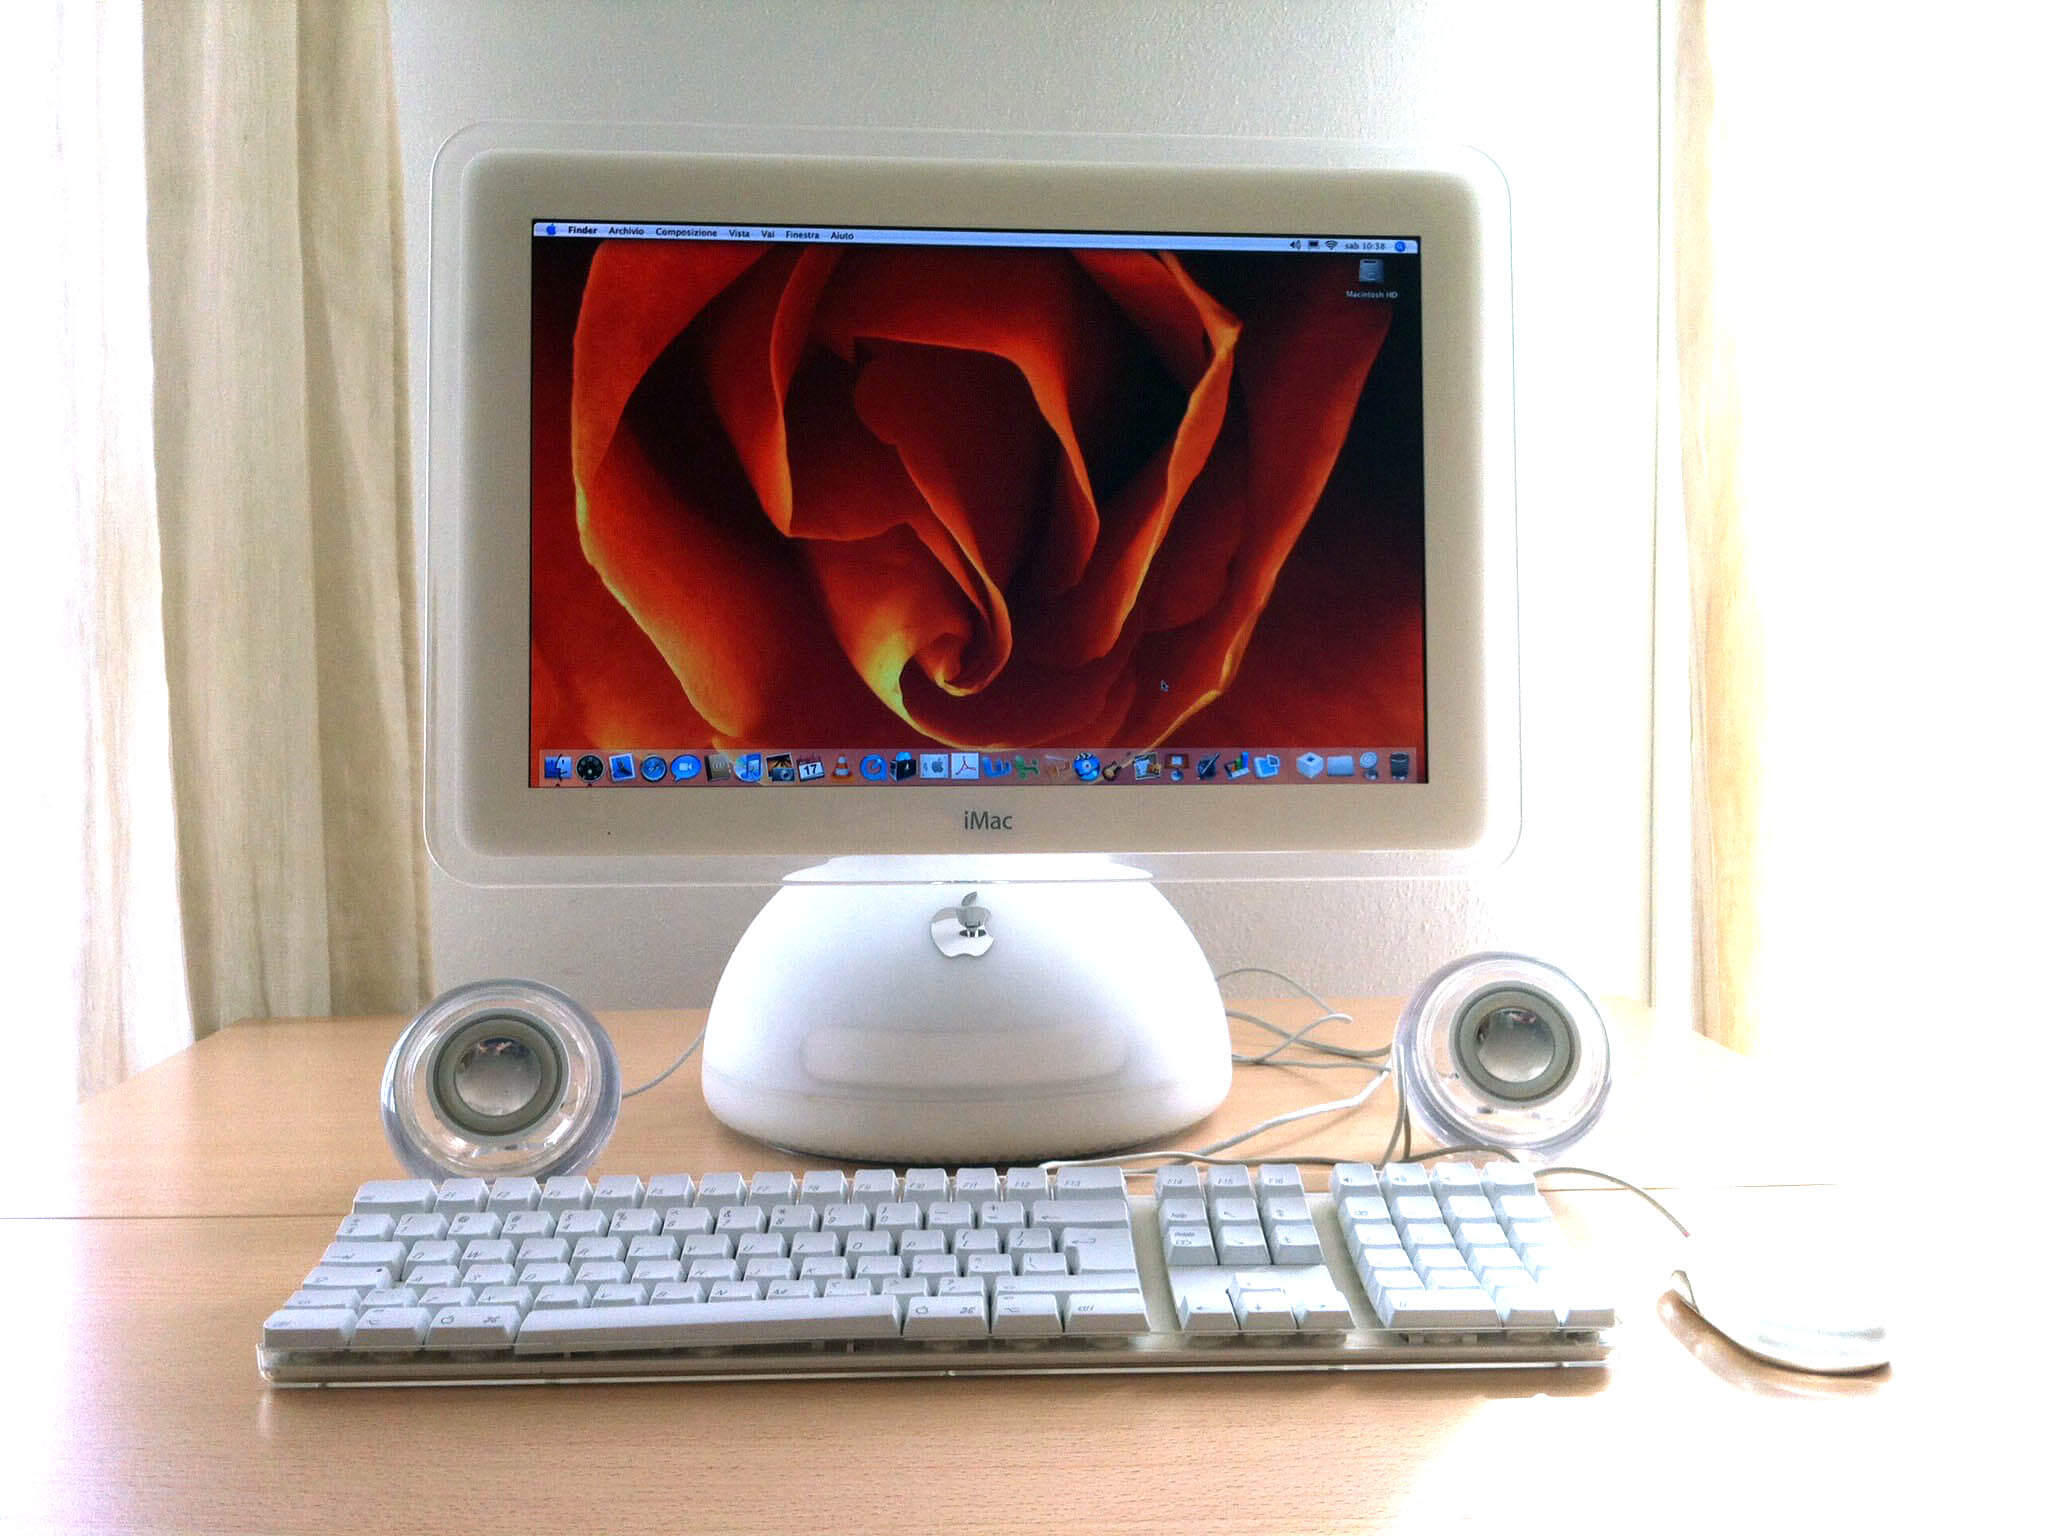 Apple iMac G4 2